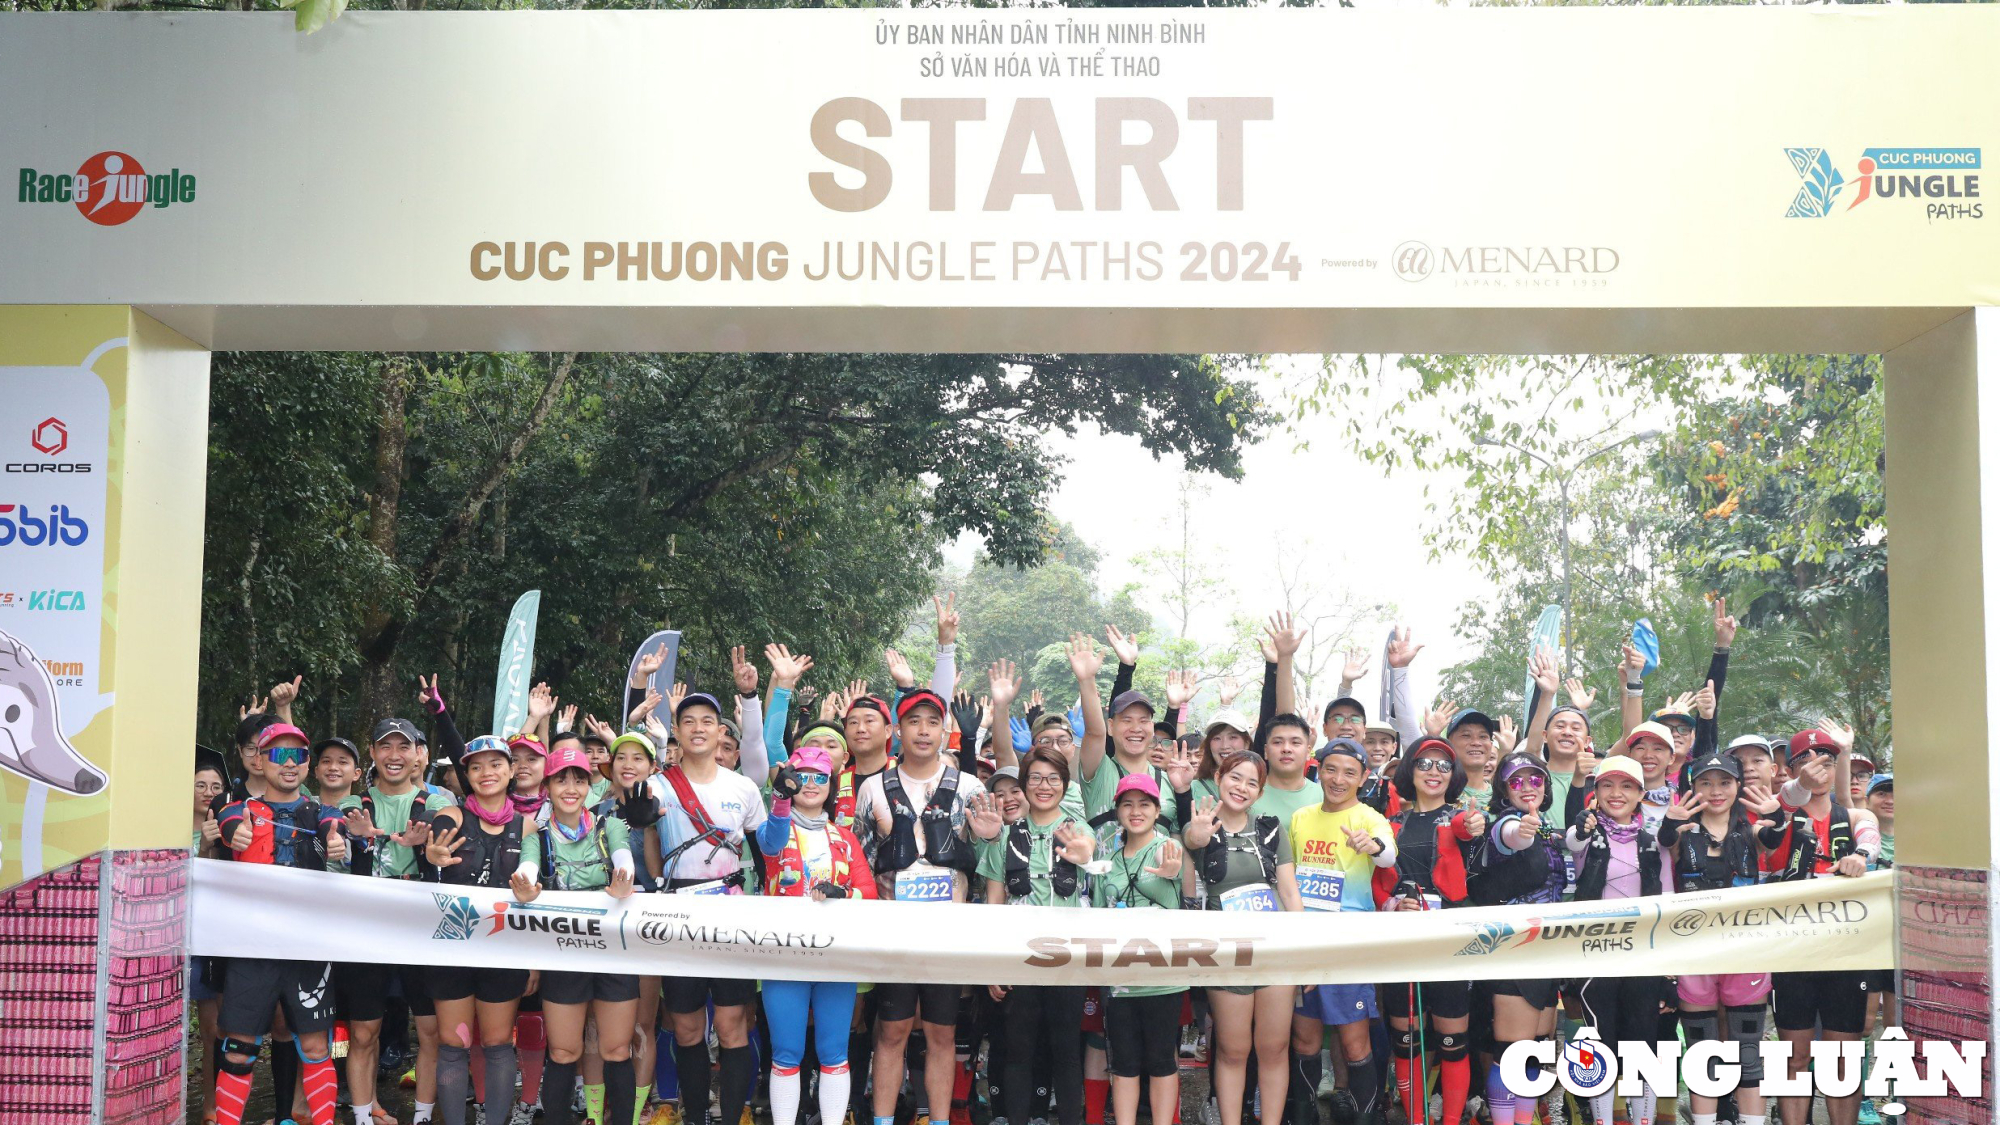 le be mac giai chay cuc phuong jungle paths 2024 powered by menard hinh 1